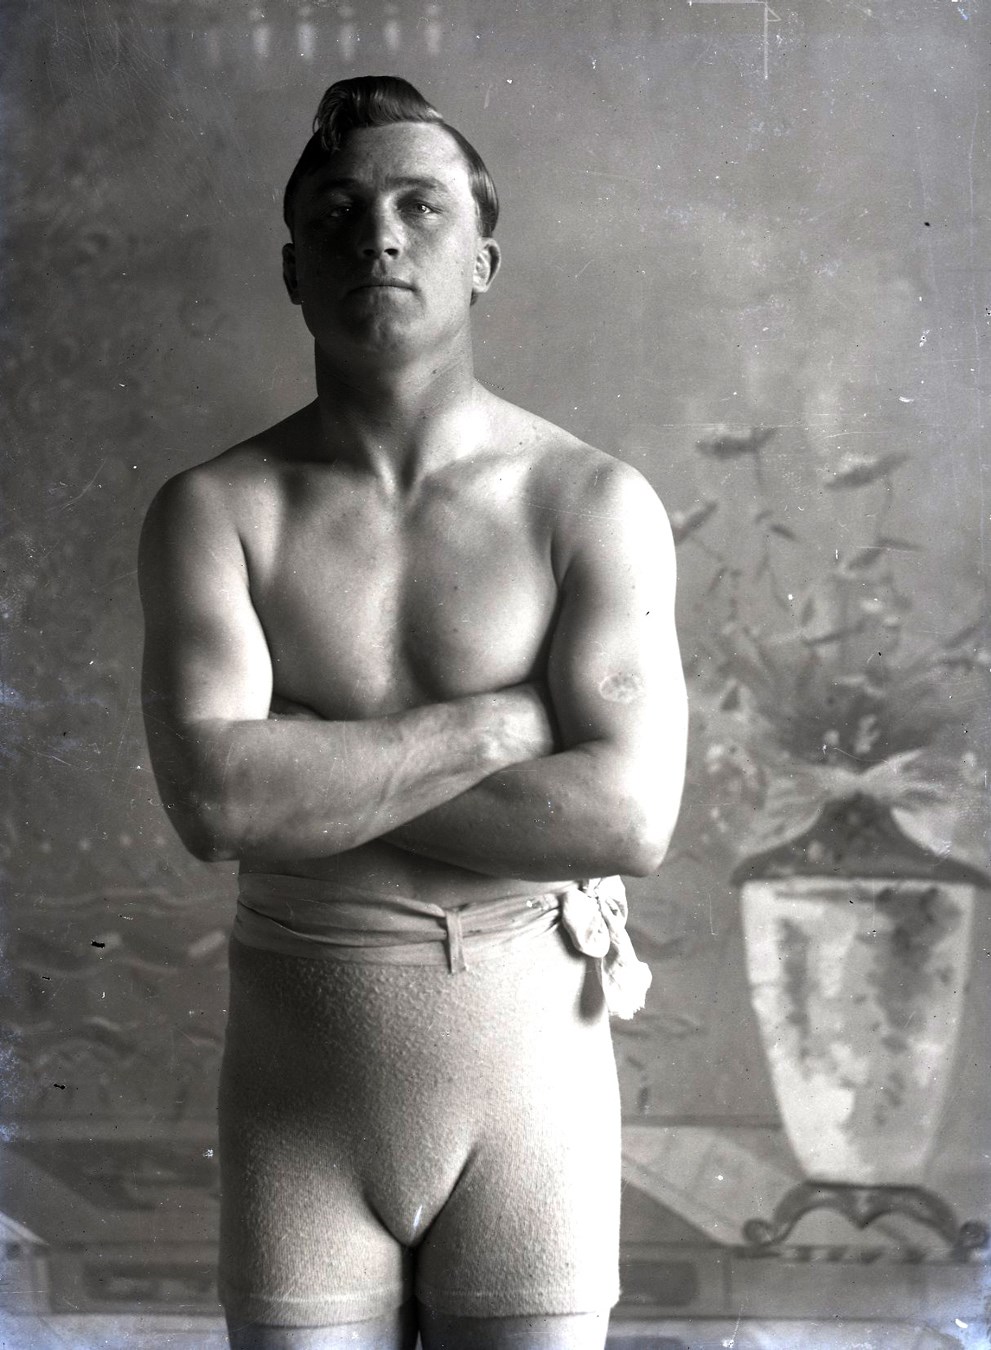 - Early 1900s Fireman Jim Flynn "Boxing Pose" Type I Glass Plate Negative by Dana Studio